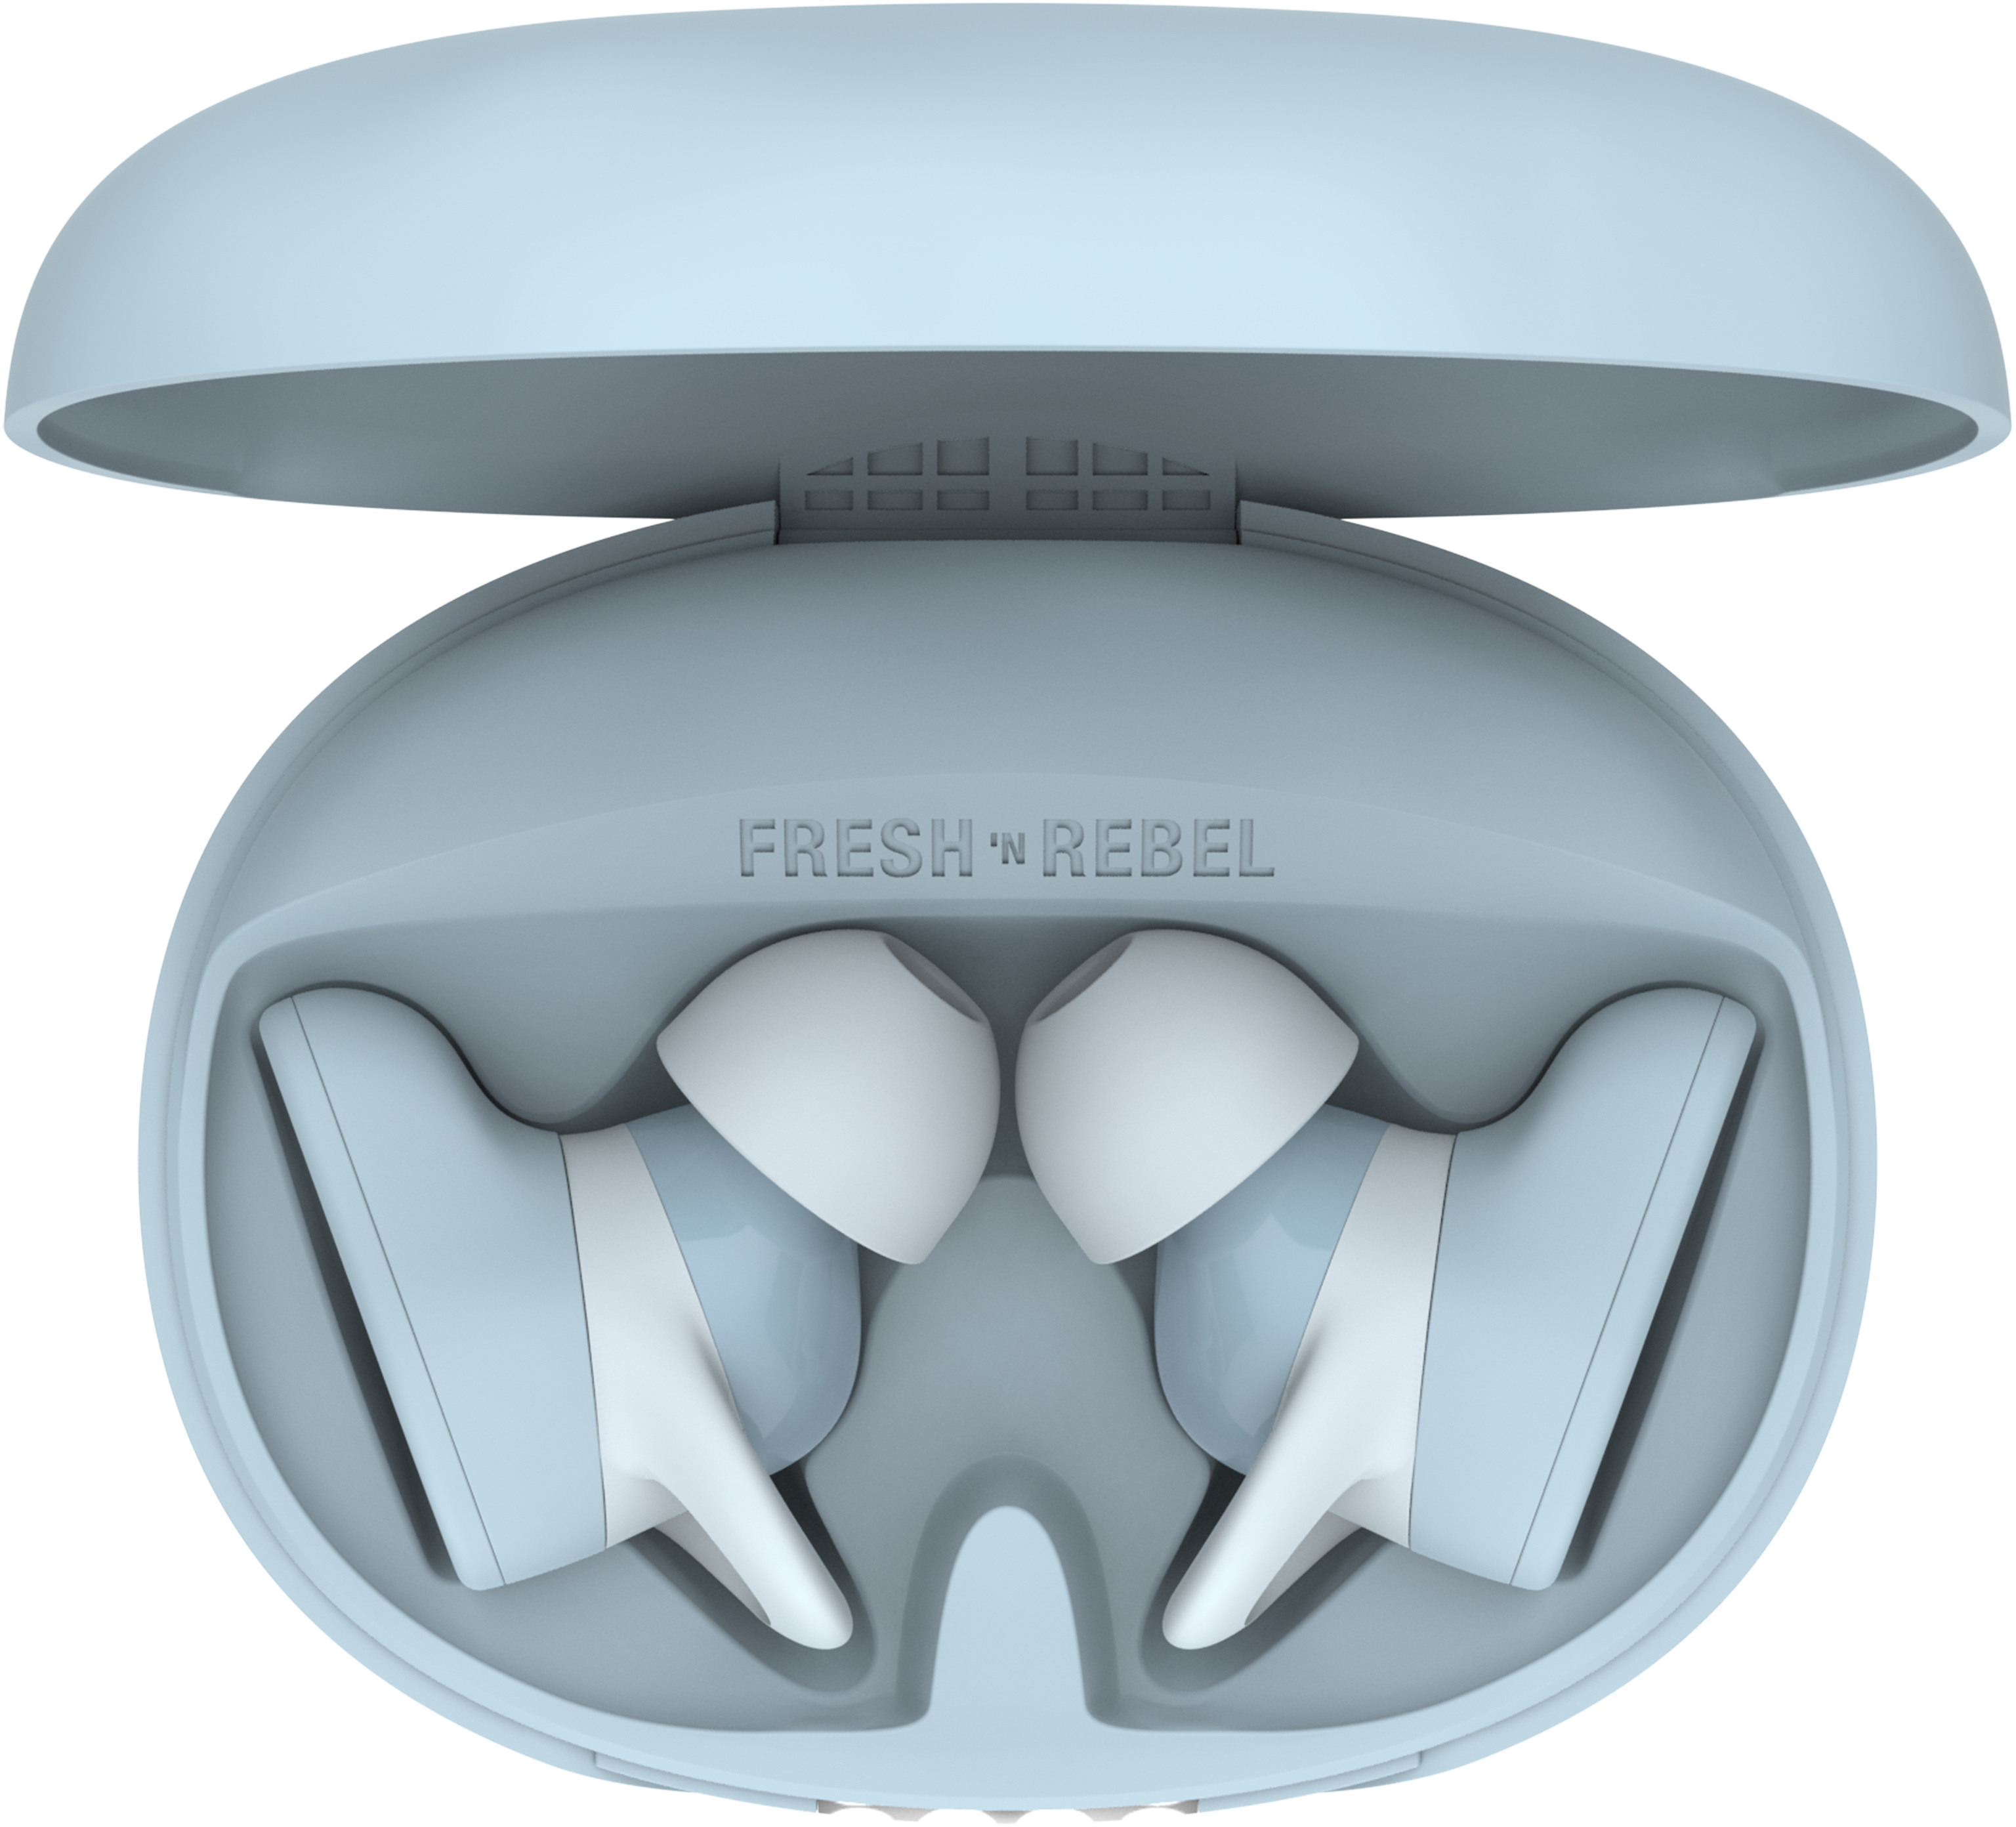 FRESH'N REBEL Twins Move - TWS earbuds 3TW1600DB Dusky Blue sport earbuds